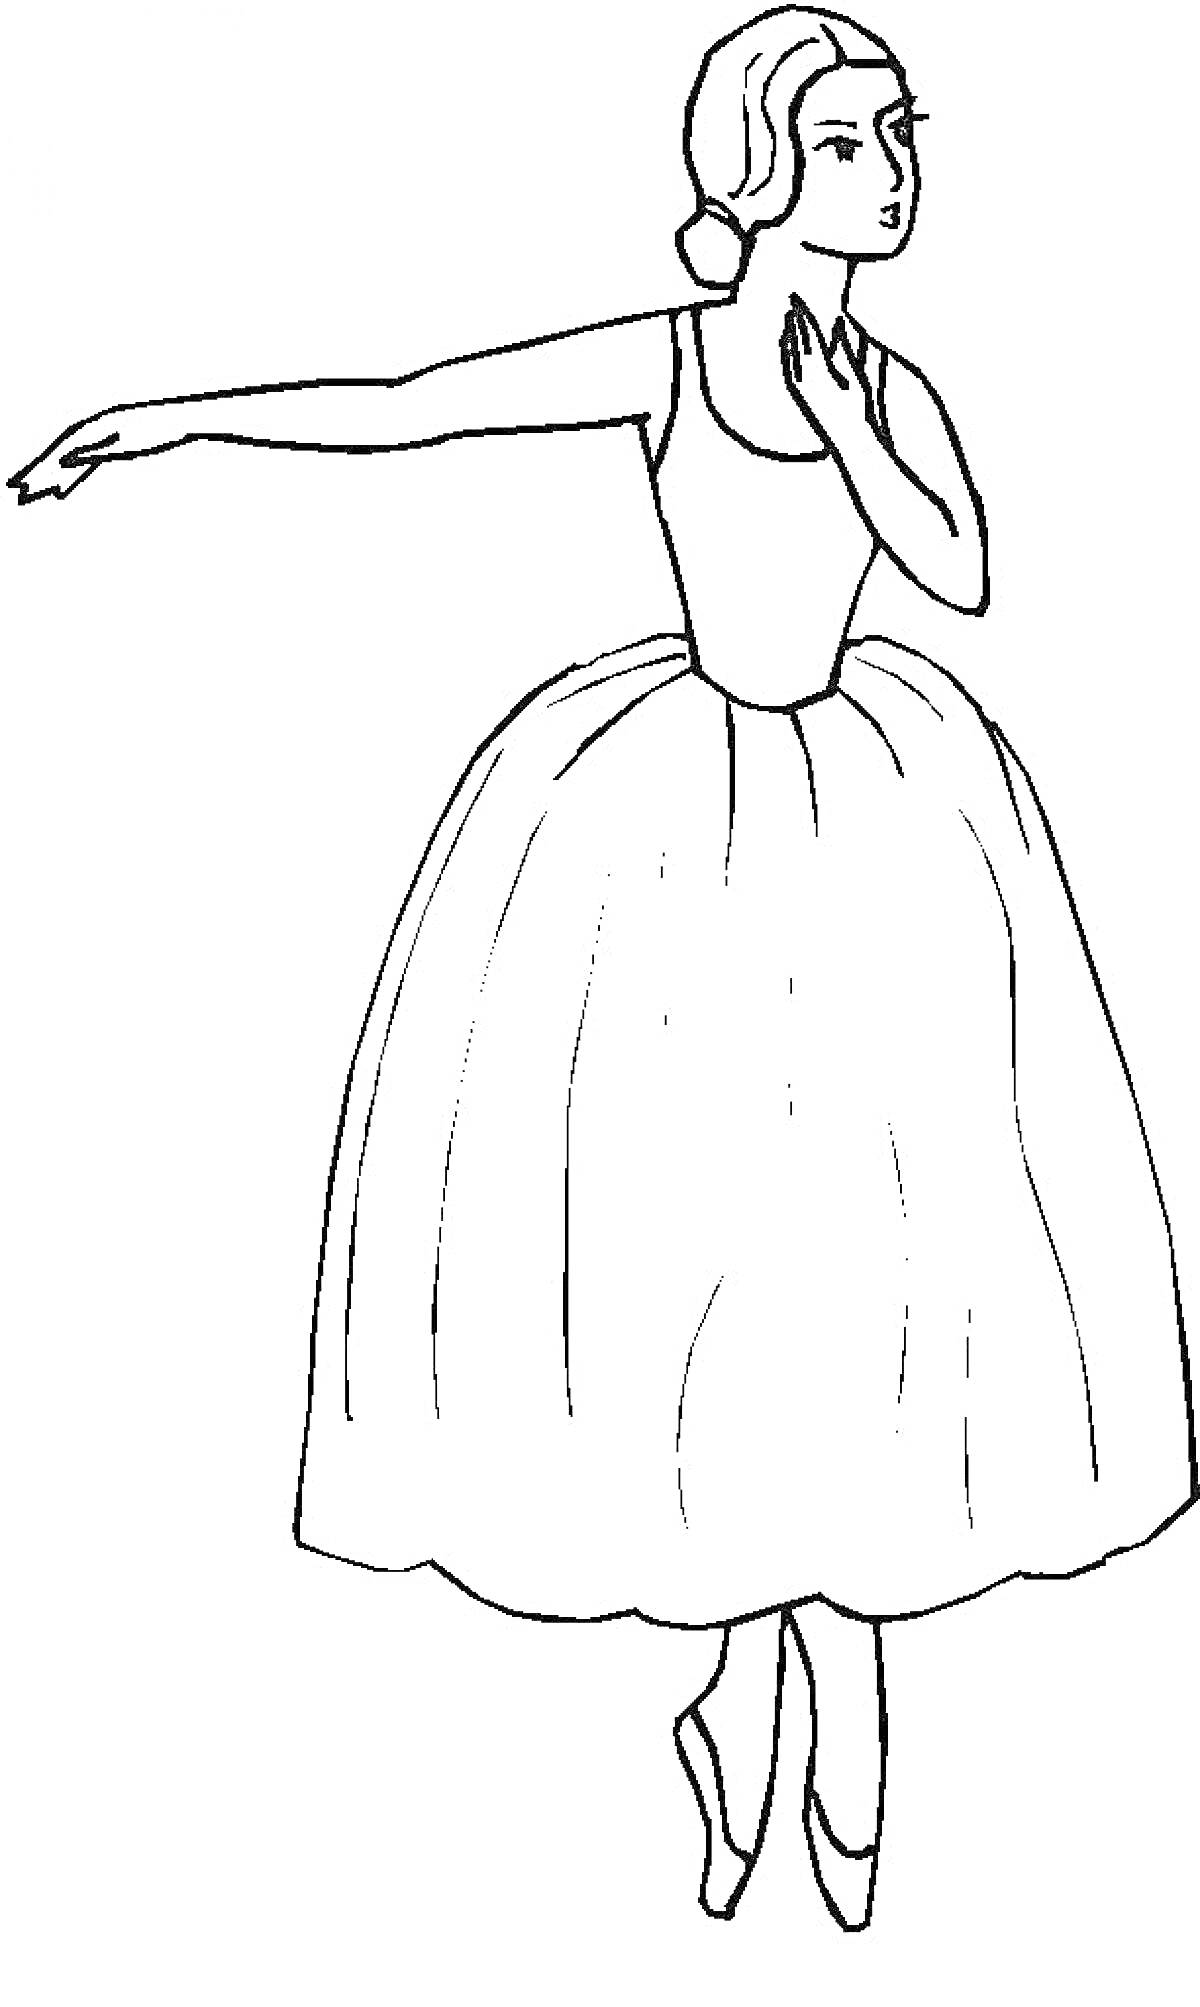 Раскраска Балерина в пуантах с вытянутой рукой